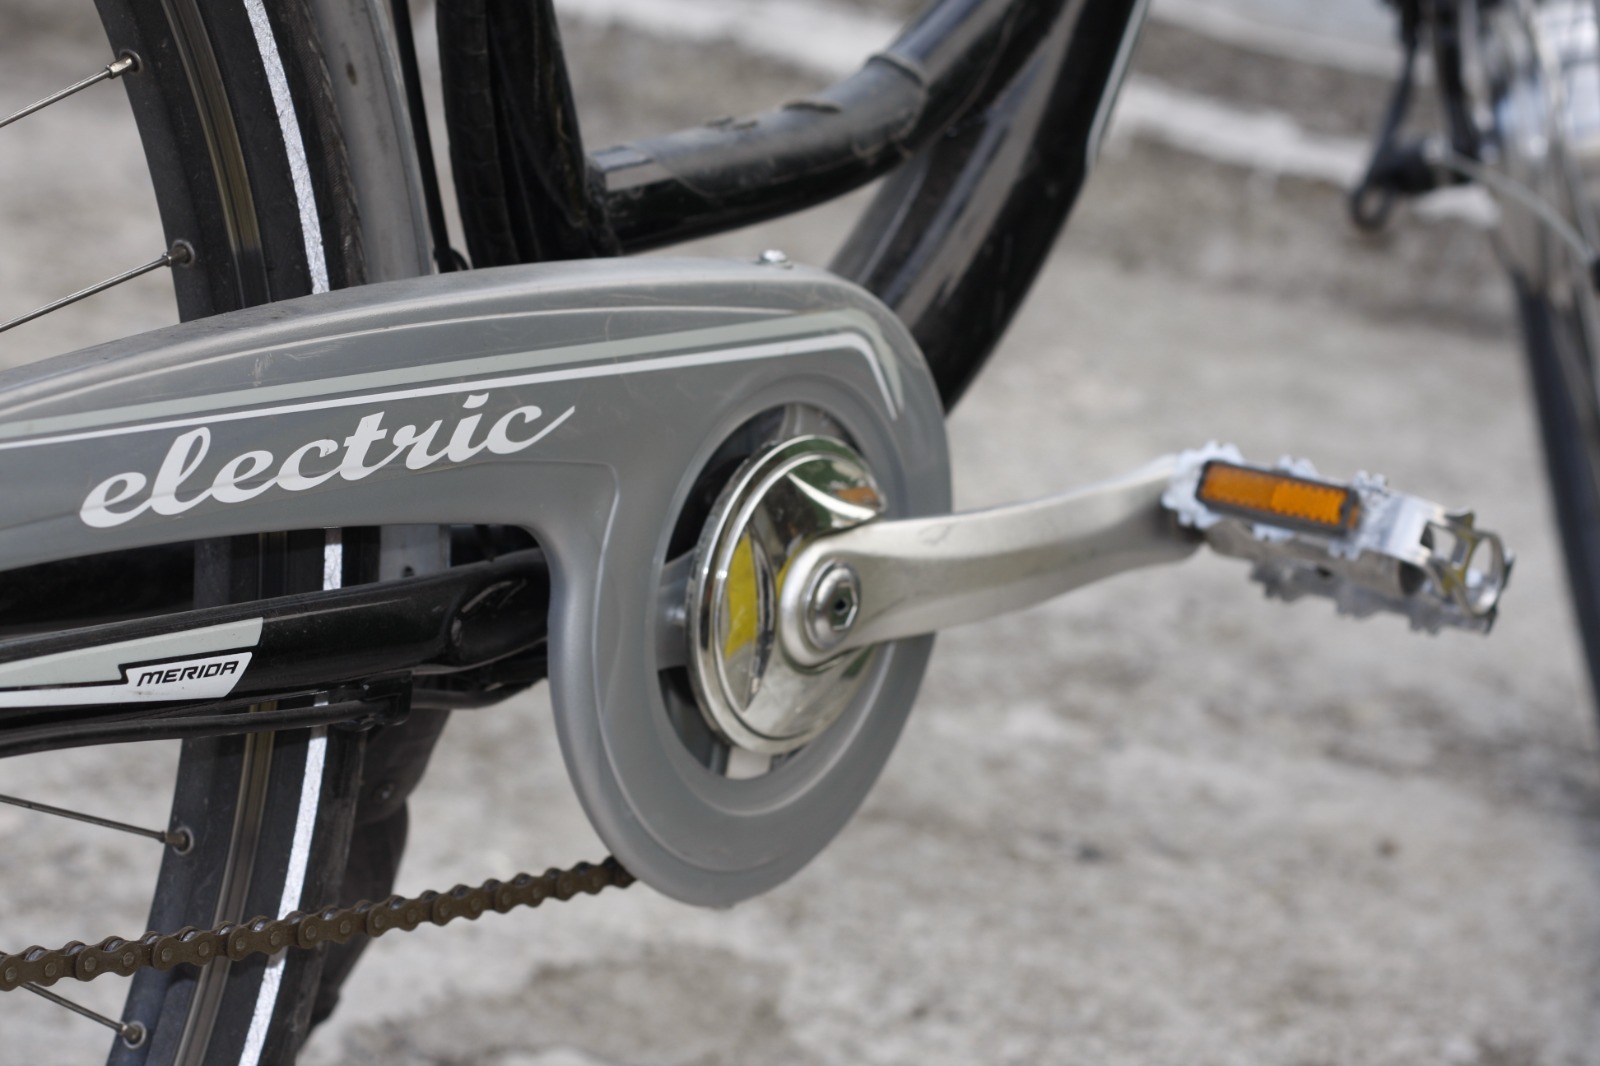 Bicicleta elecrtica